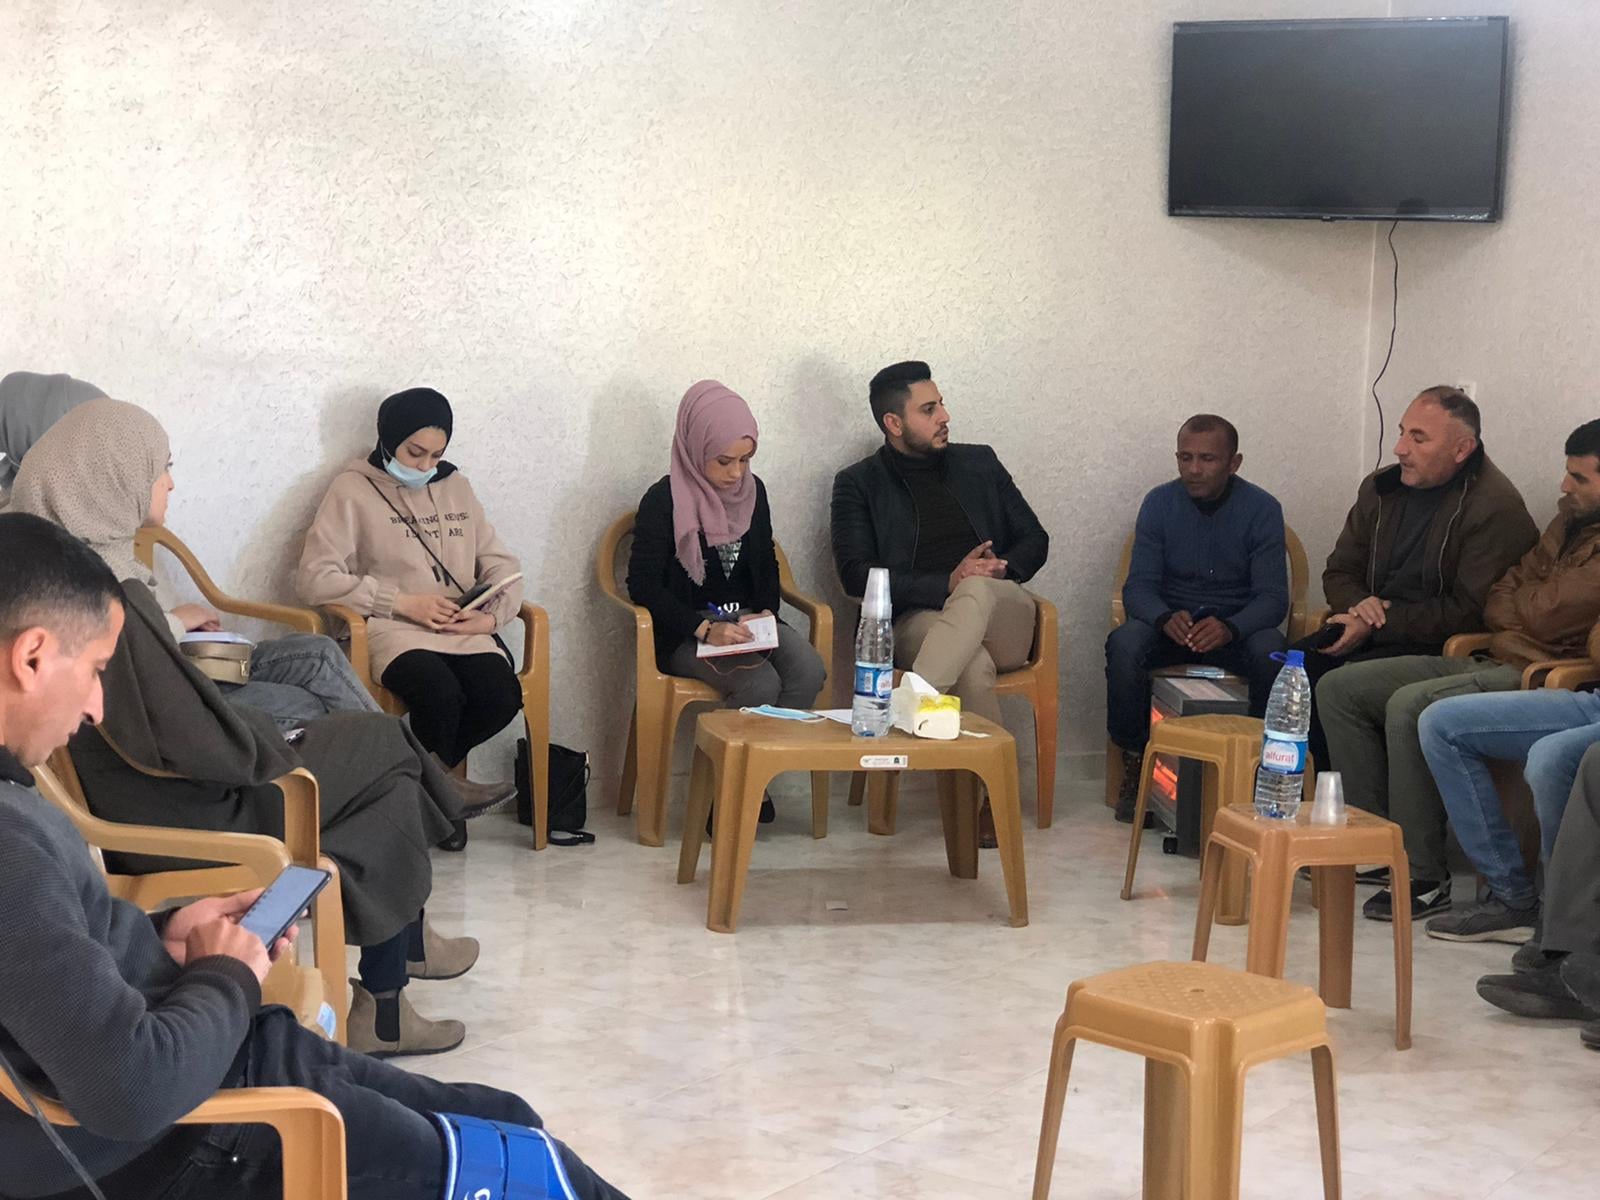  ADWAR holds an effective planning meeting in Masafer Yatta.